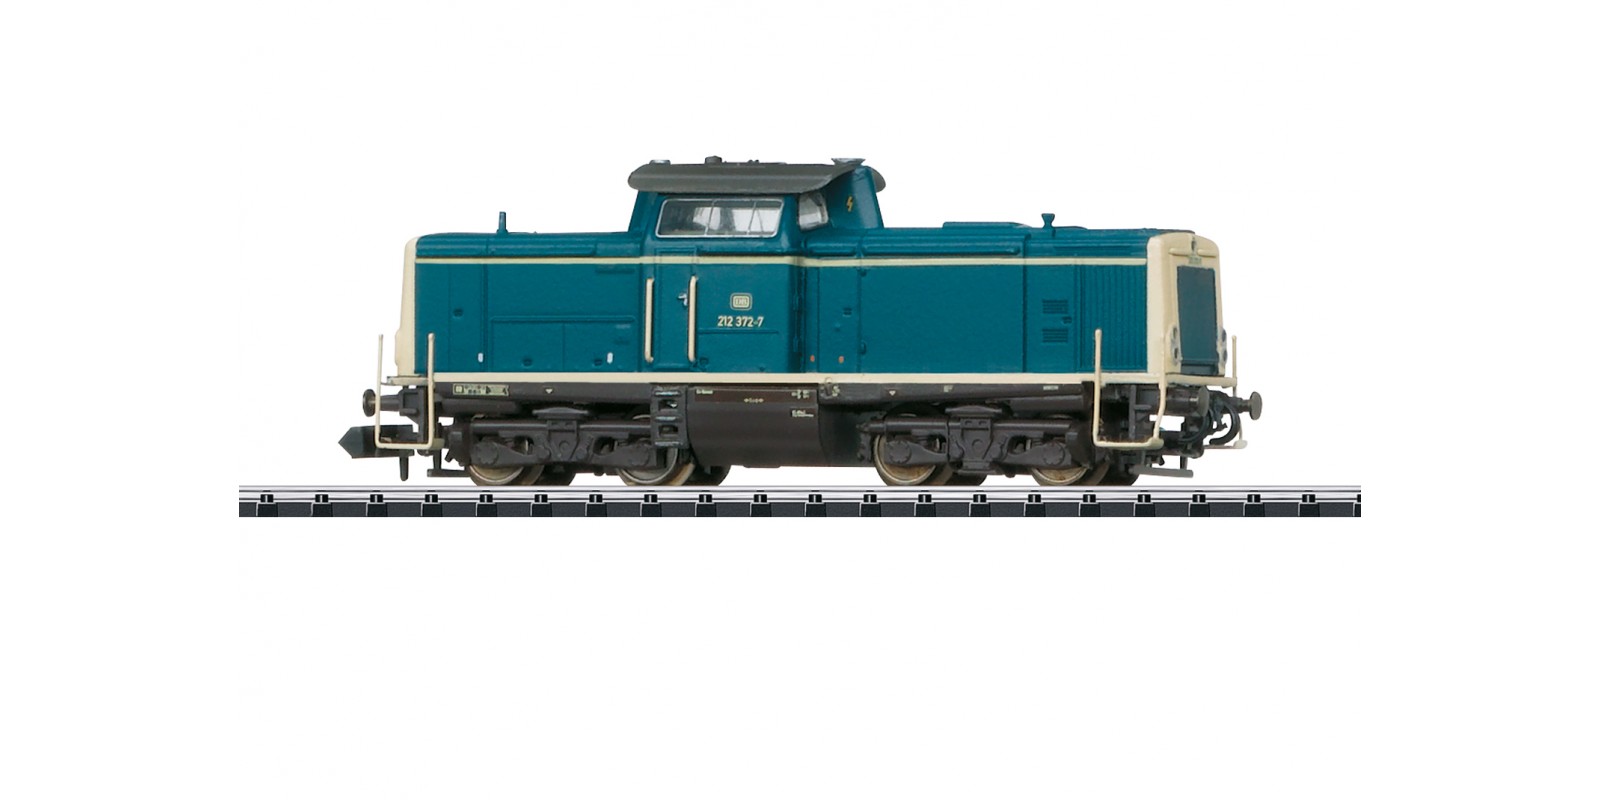 T16126 Class 212 Diesel Locomotive